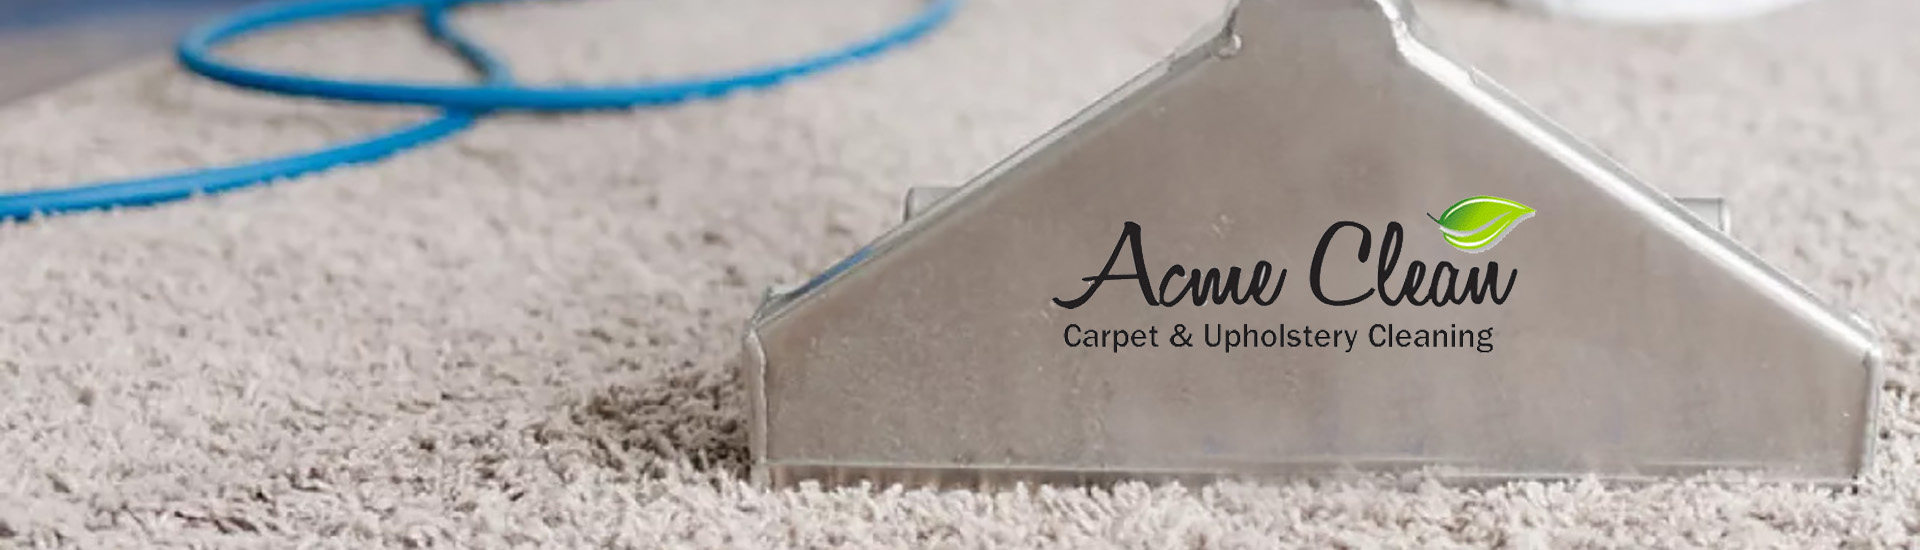 denver carpet cleaning company